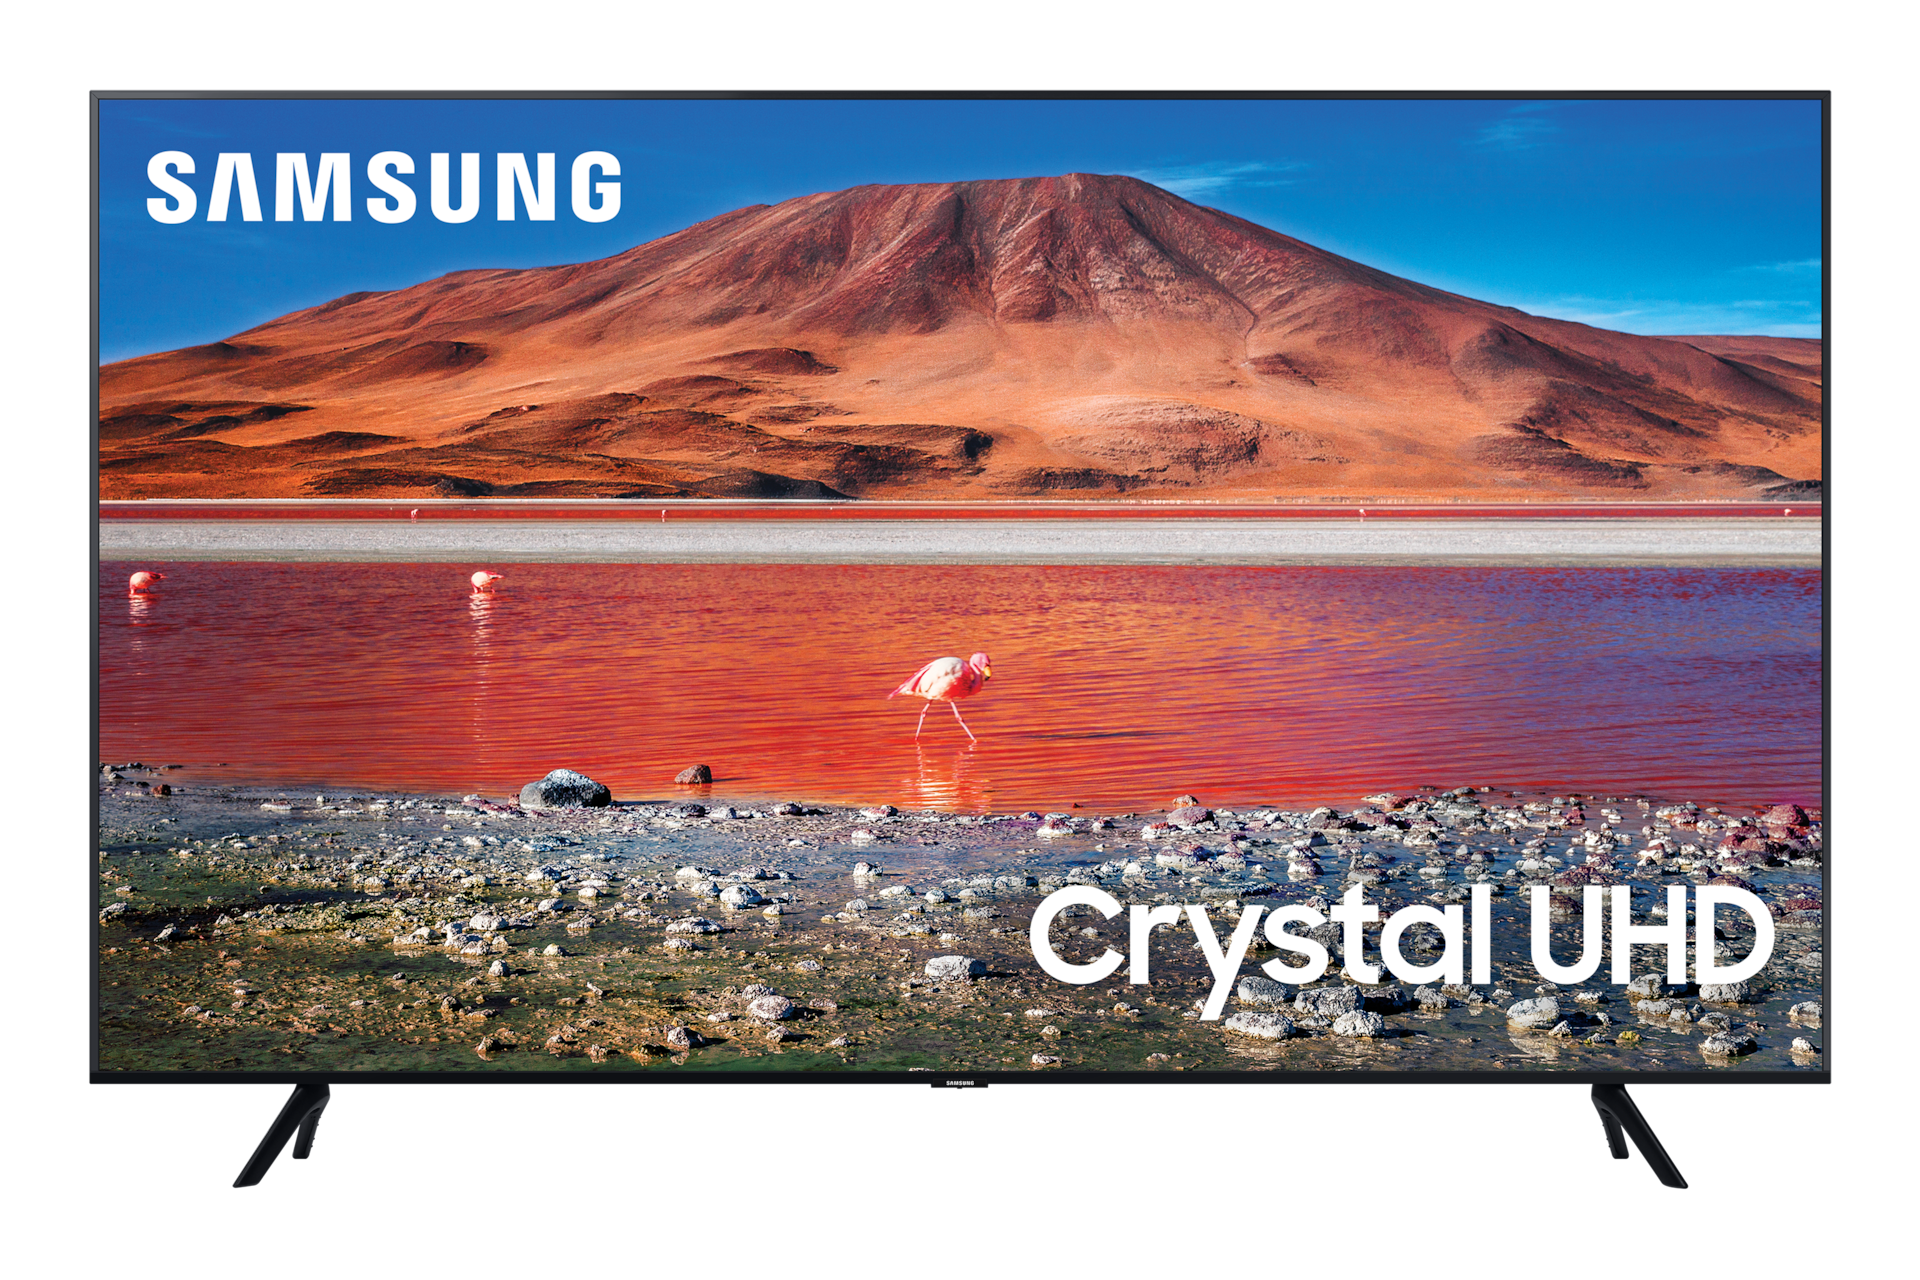 35++ Samsung 43tu7000 crystal uhd 4k smart tv 43 inch info